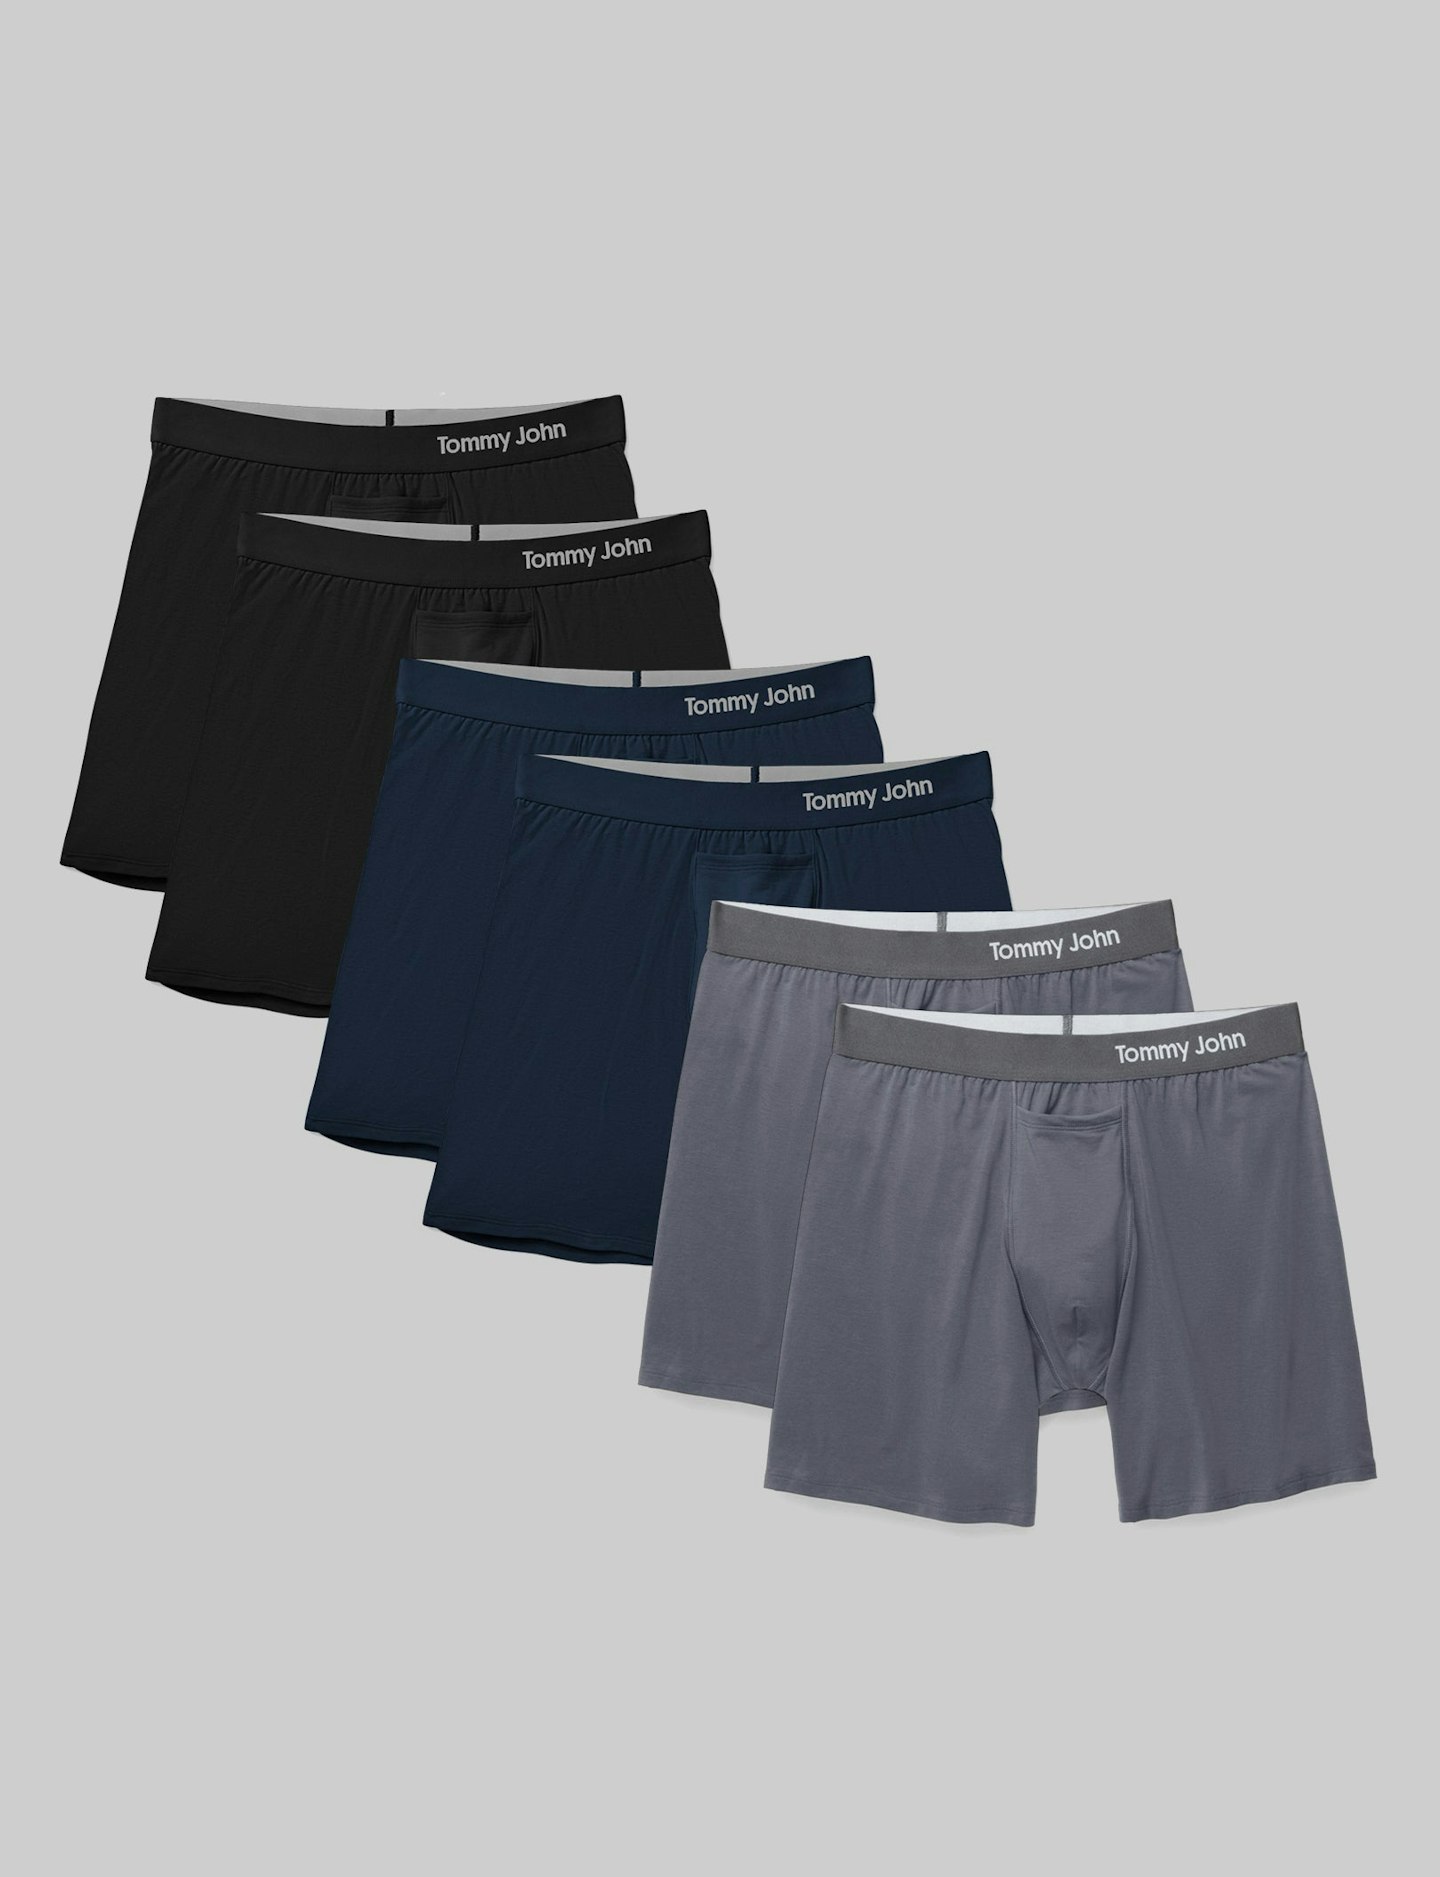 Tommy John Men's XL Cool Cotton 6 Boxer Briefs US Flag Underwear